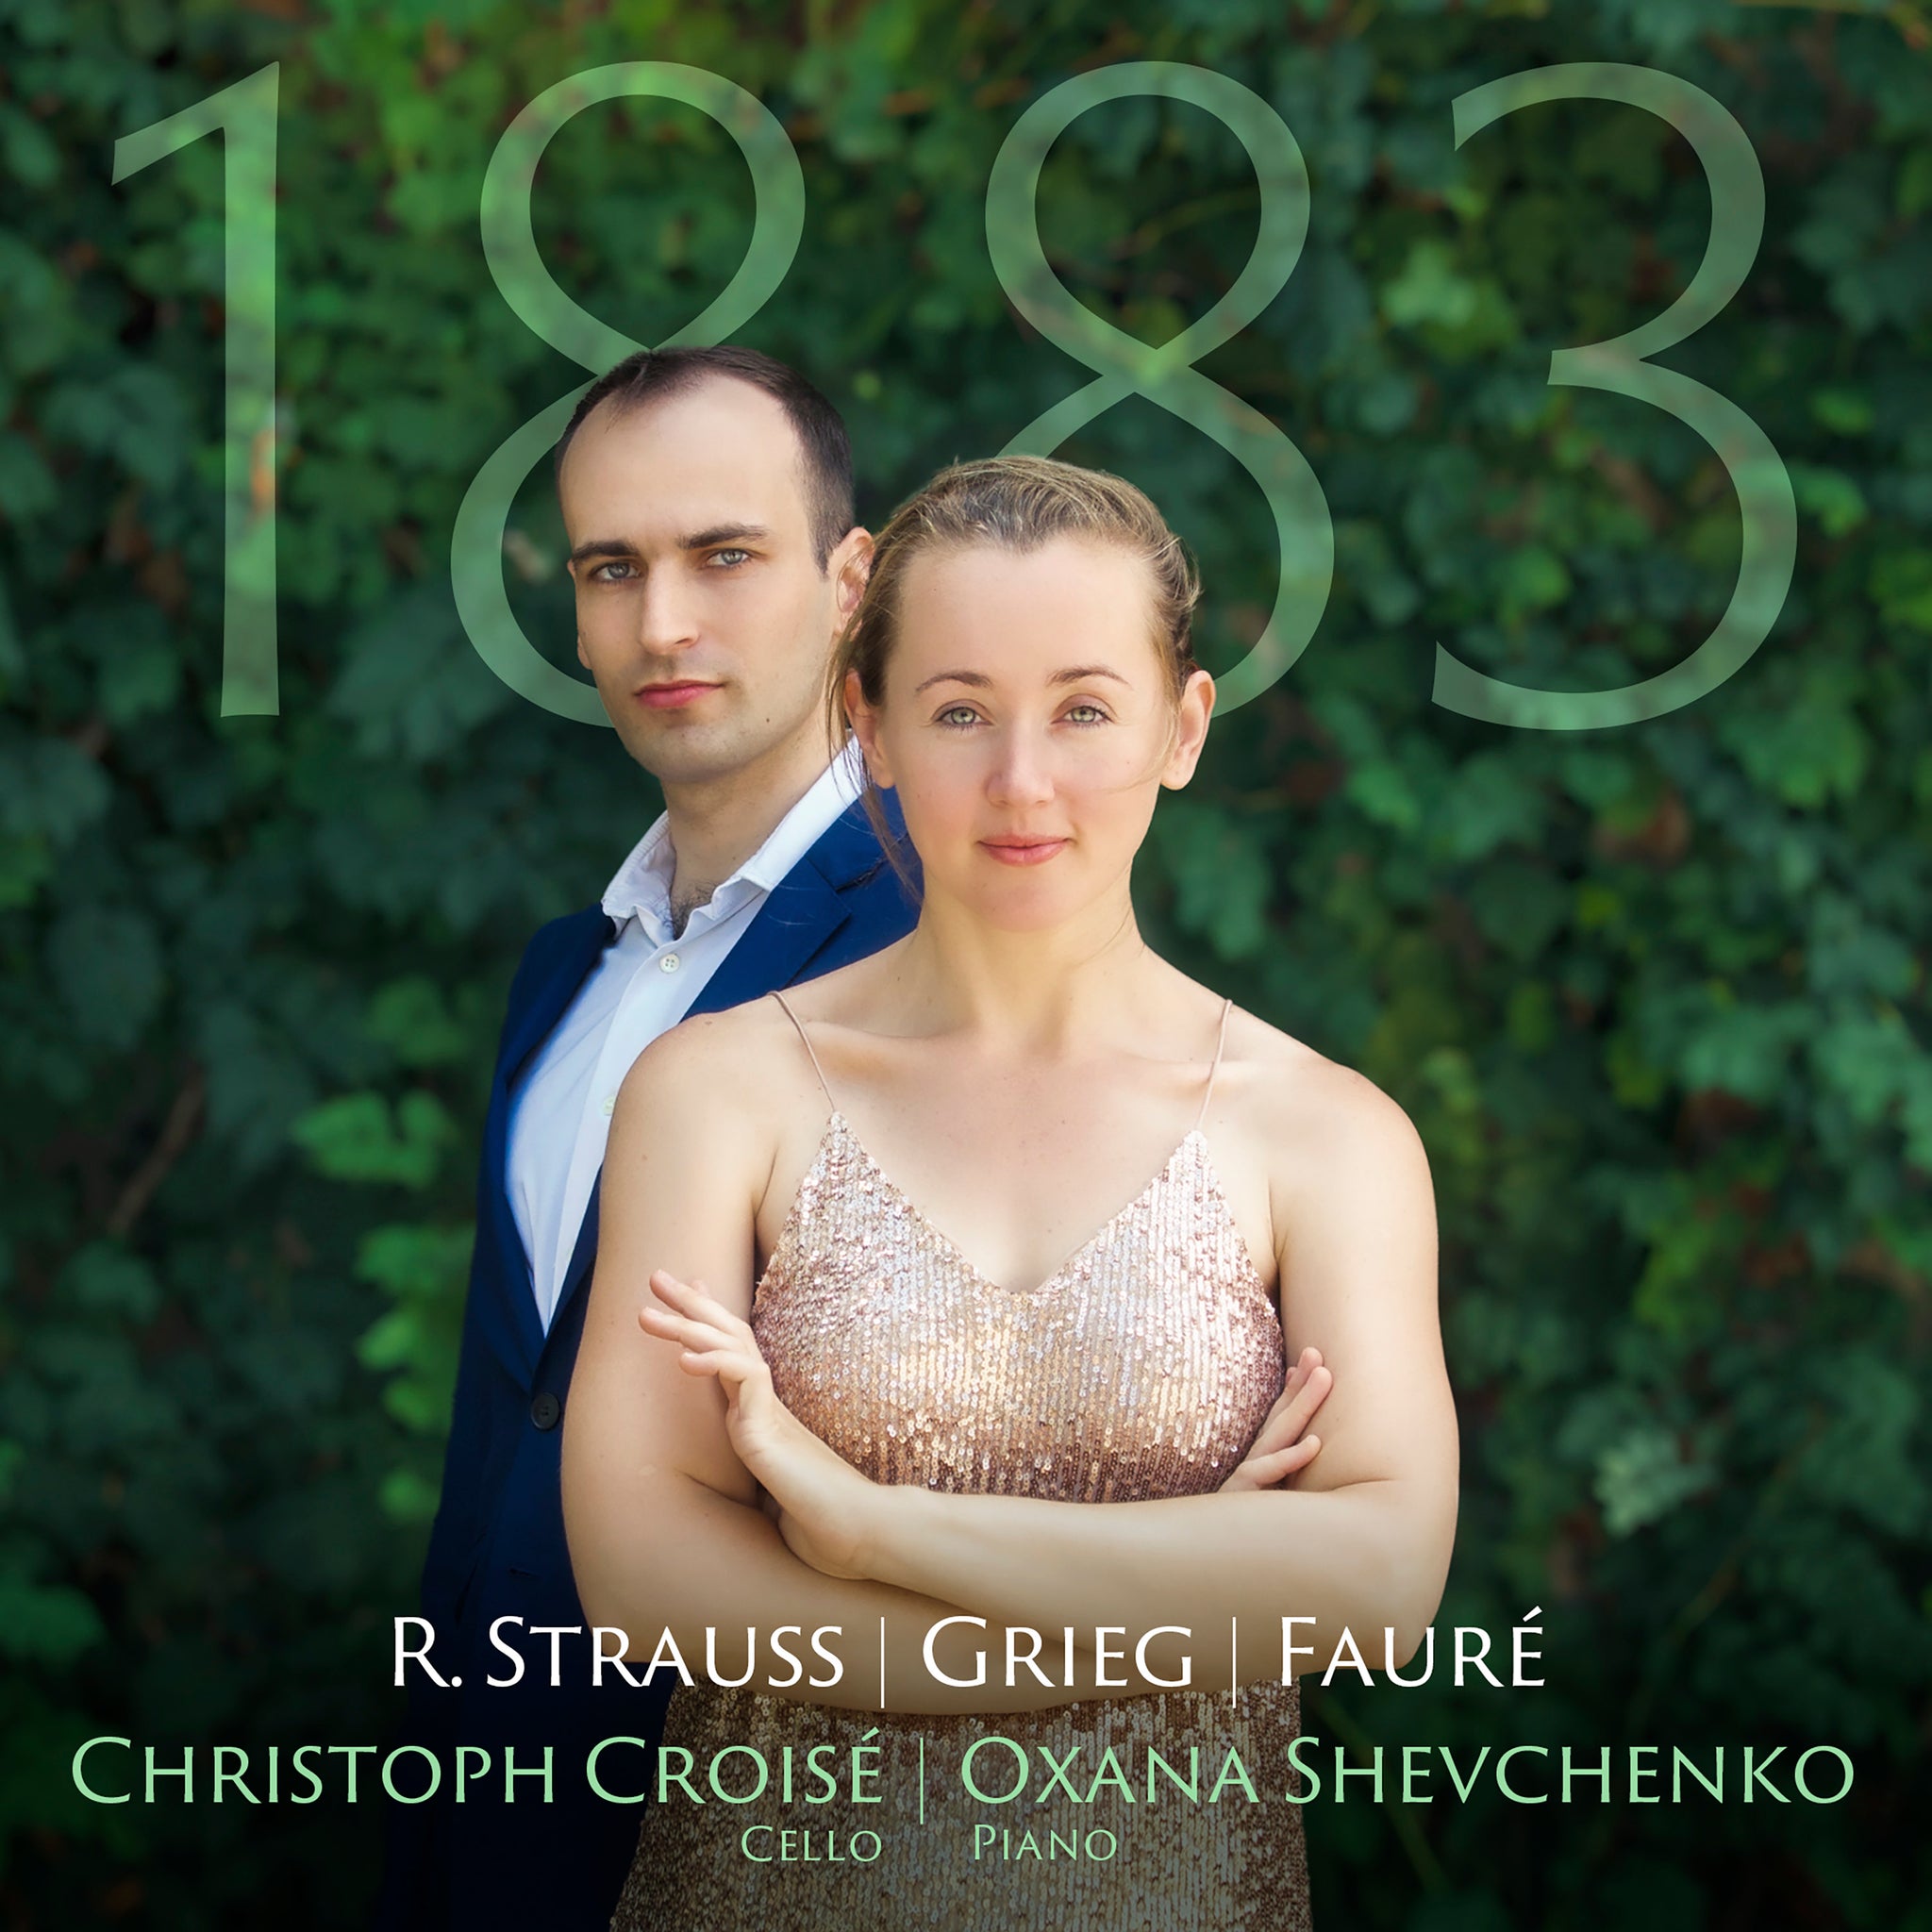 Grieg, Strauss & Fauré: 1883 - Music for Cello & Piano / Croisé, Shevchenko